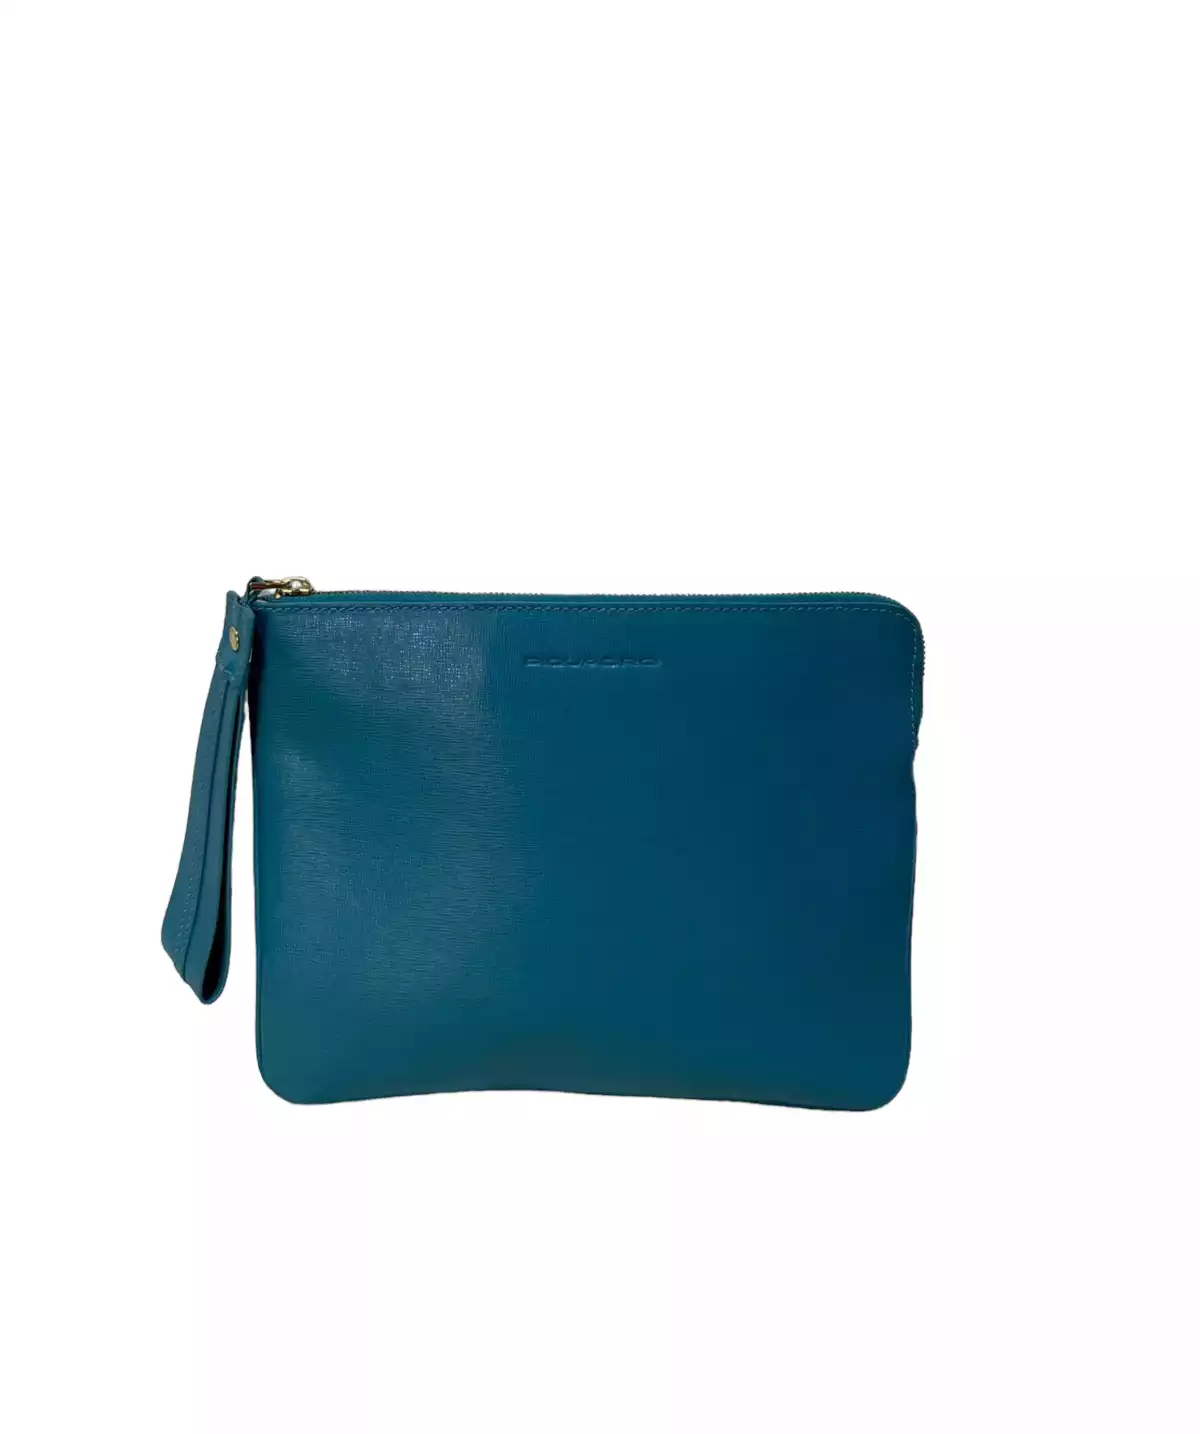 Wallet Clutch bag by Piquadro